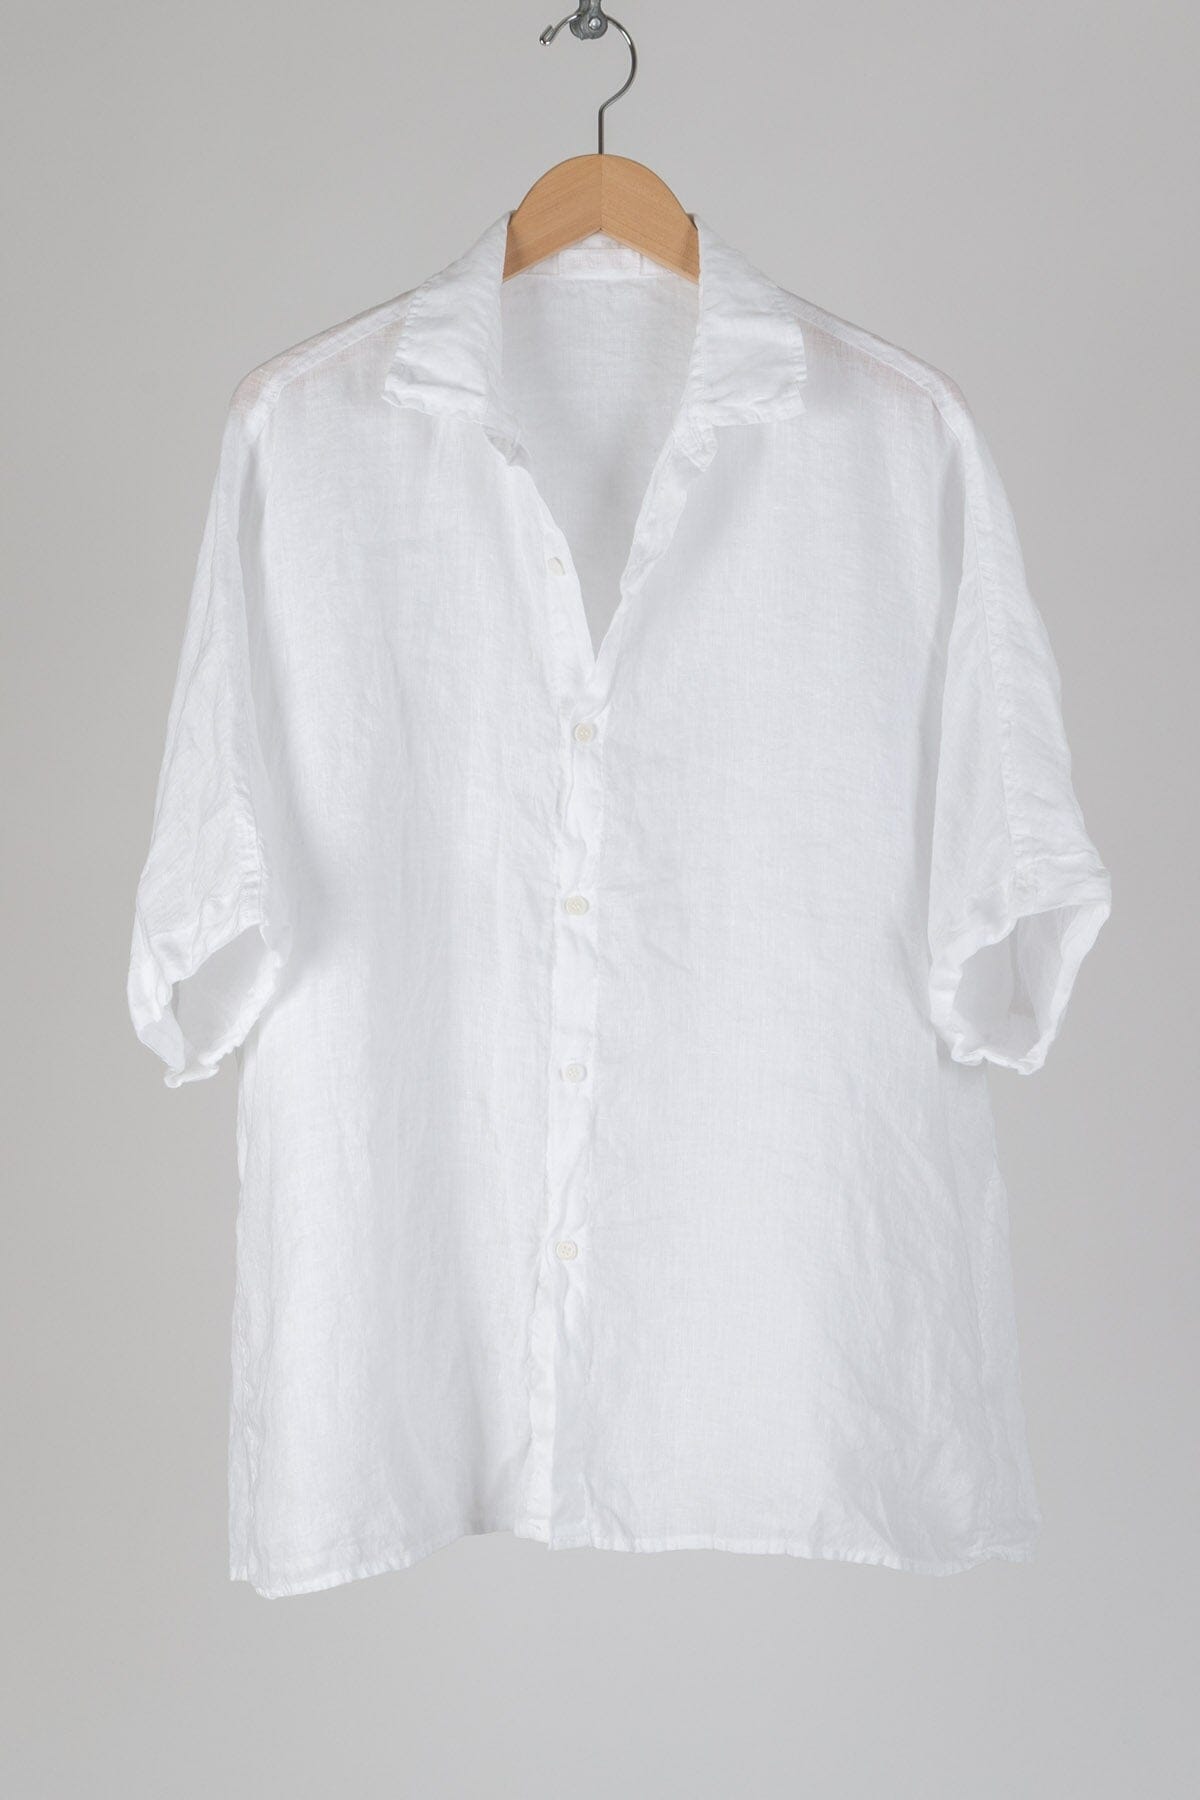 Nico - Linen S10 - Linen Shirt/Top/Tunic CP Shades white